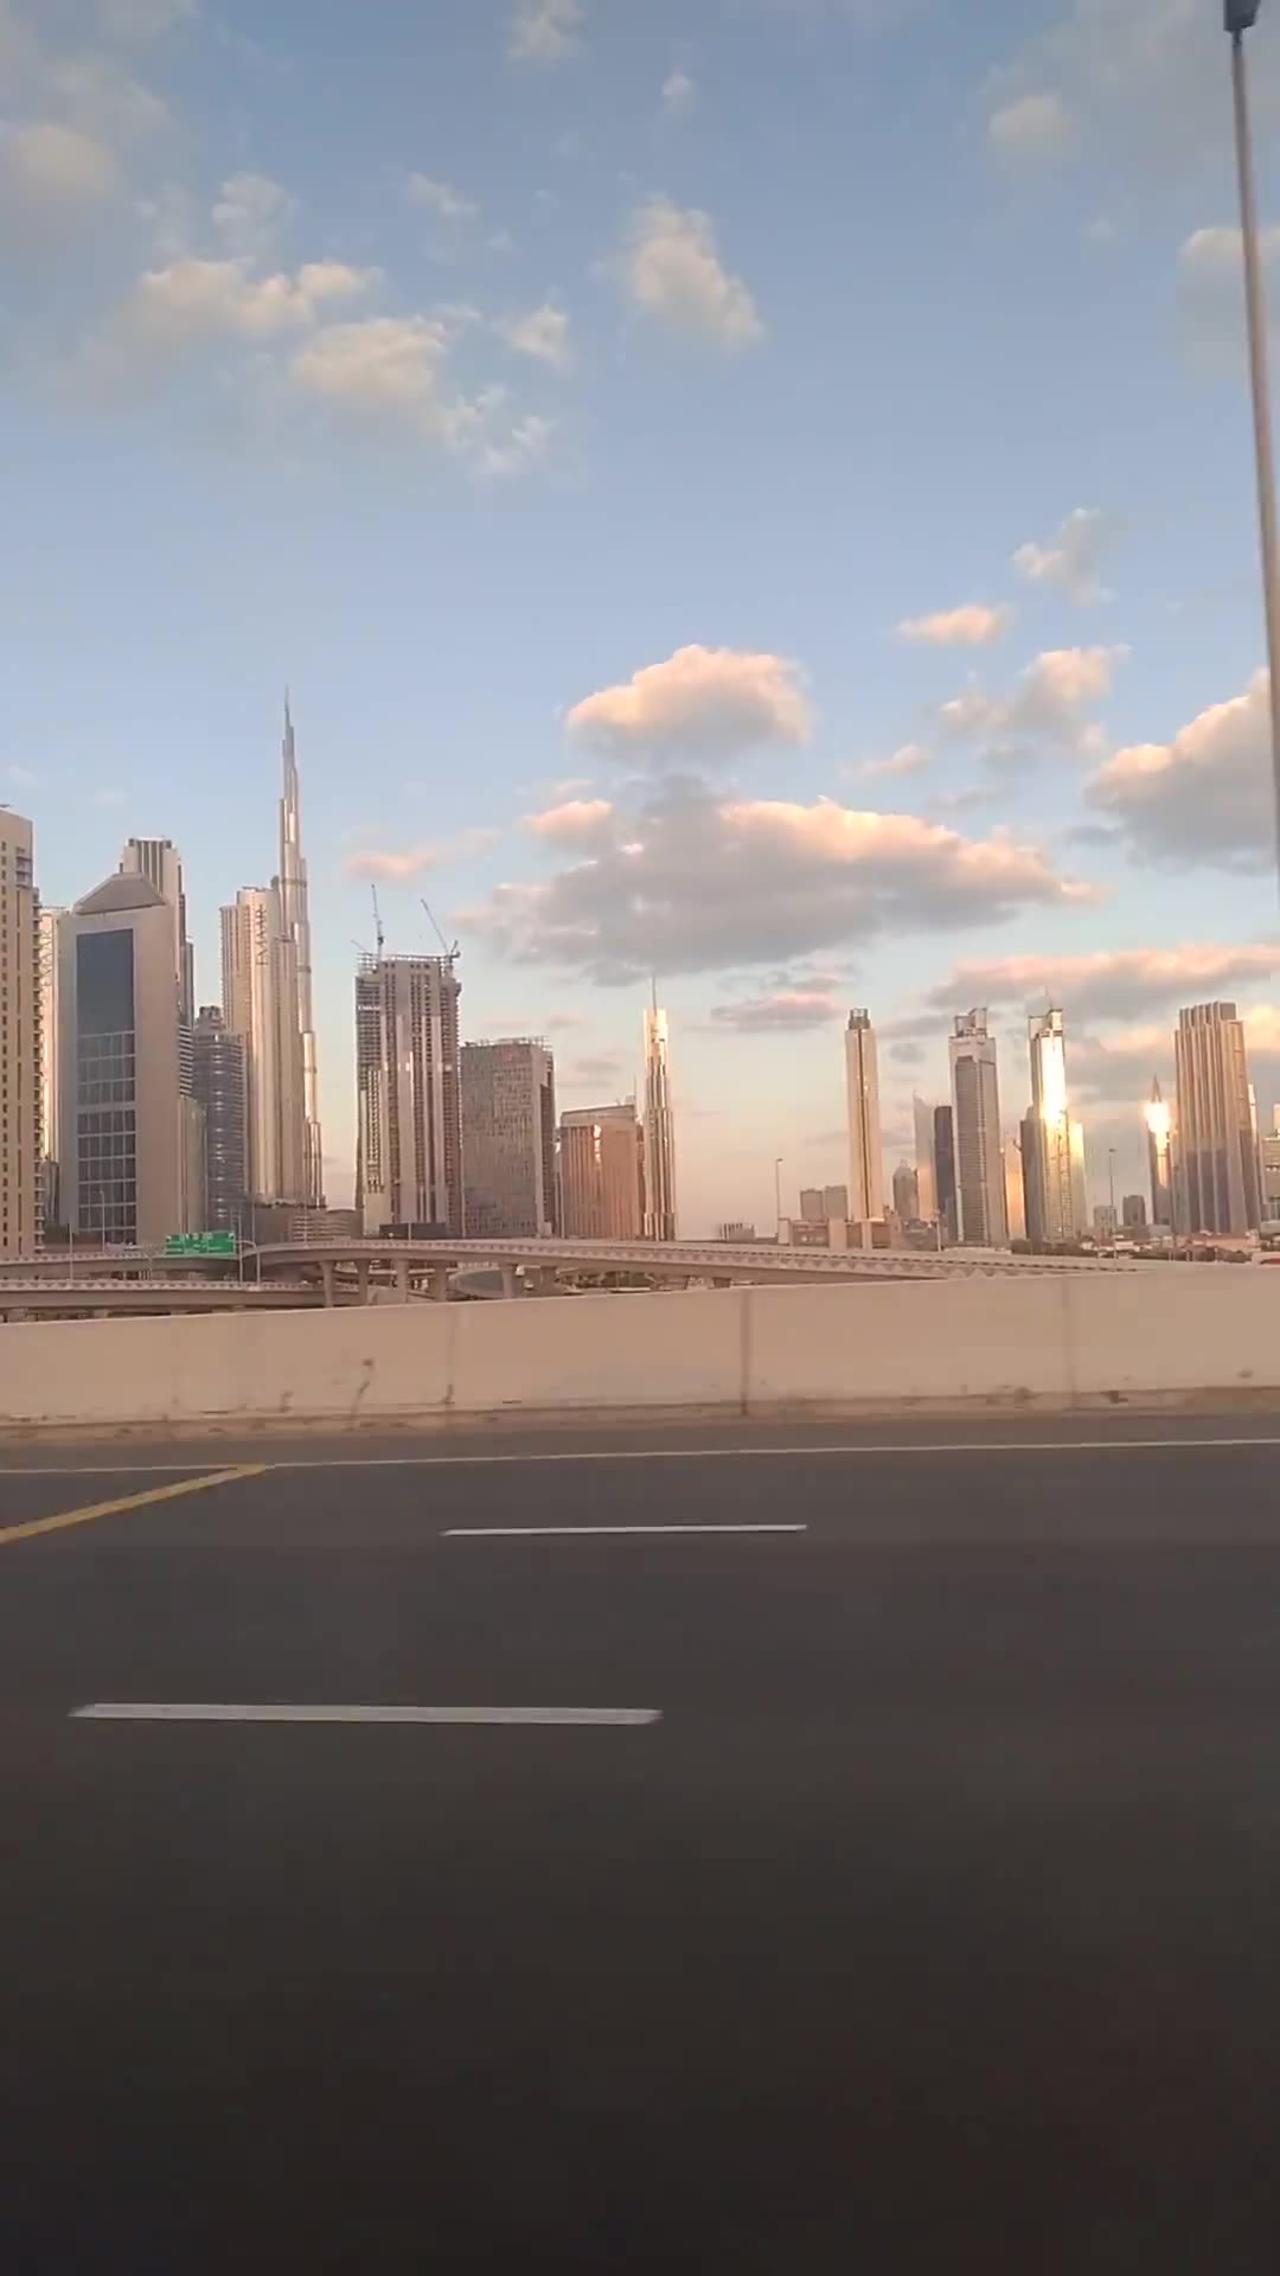 Dubai, Burj khalifa, morning view